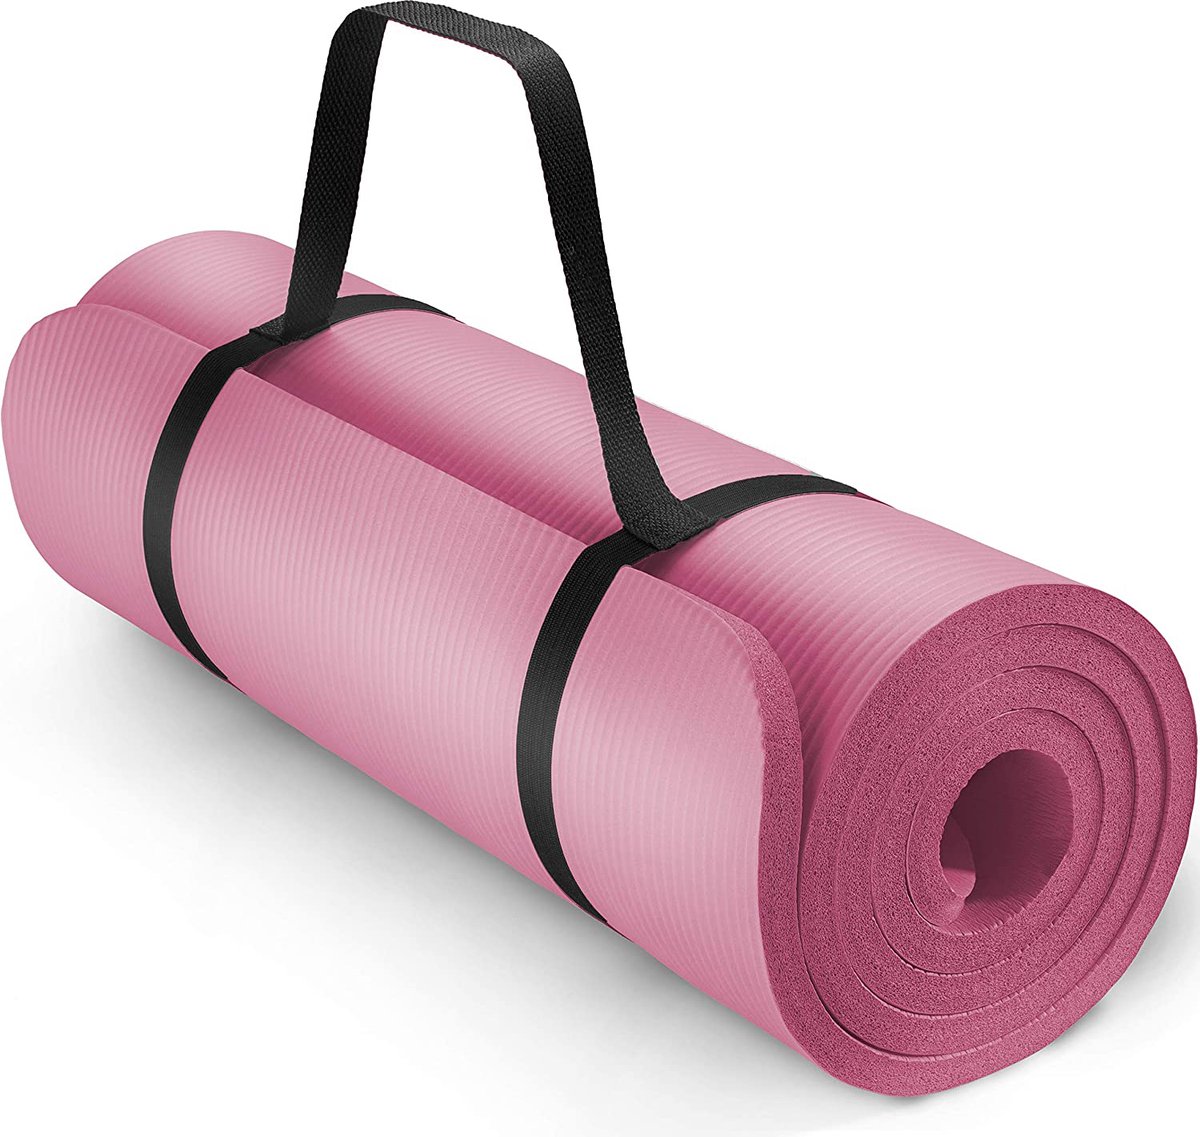 Sens Design Fitnessmat - Yogamat - 185 x 60 cm - 1.5cm dik - Roze